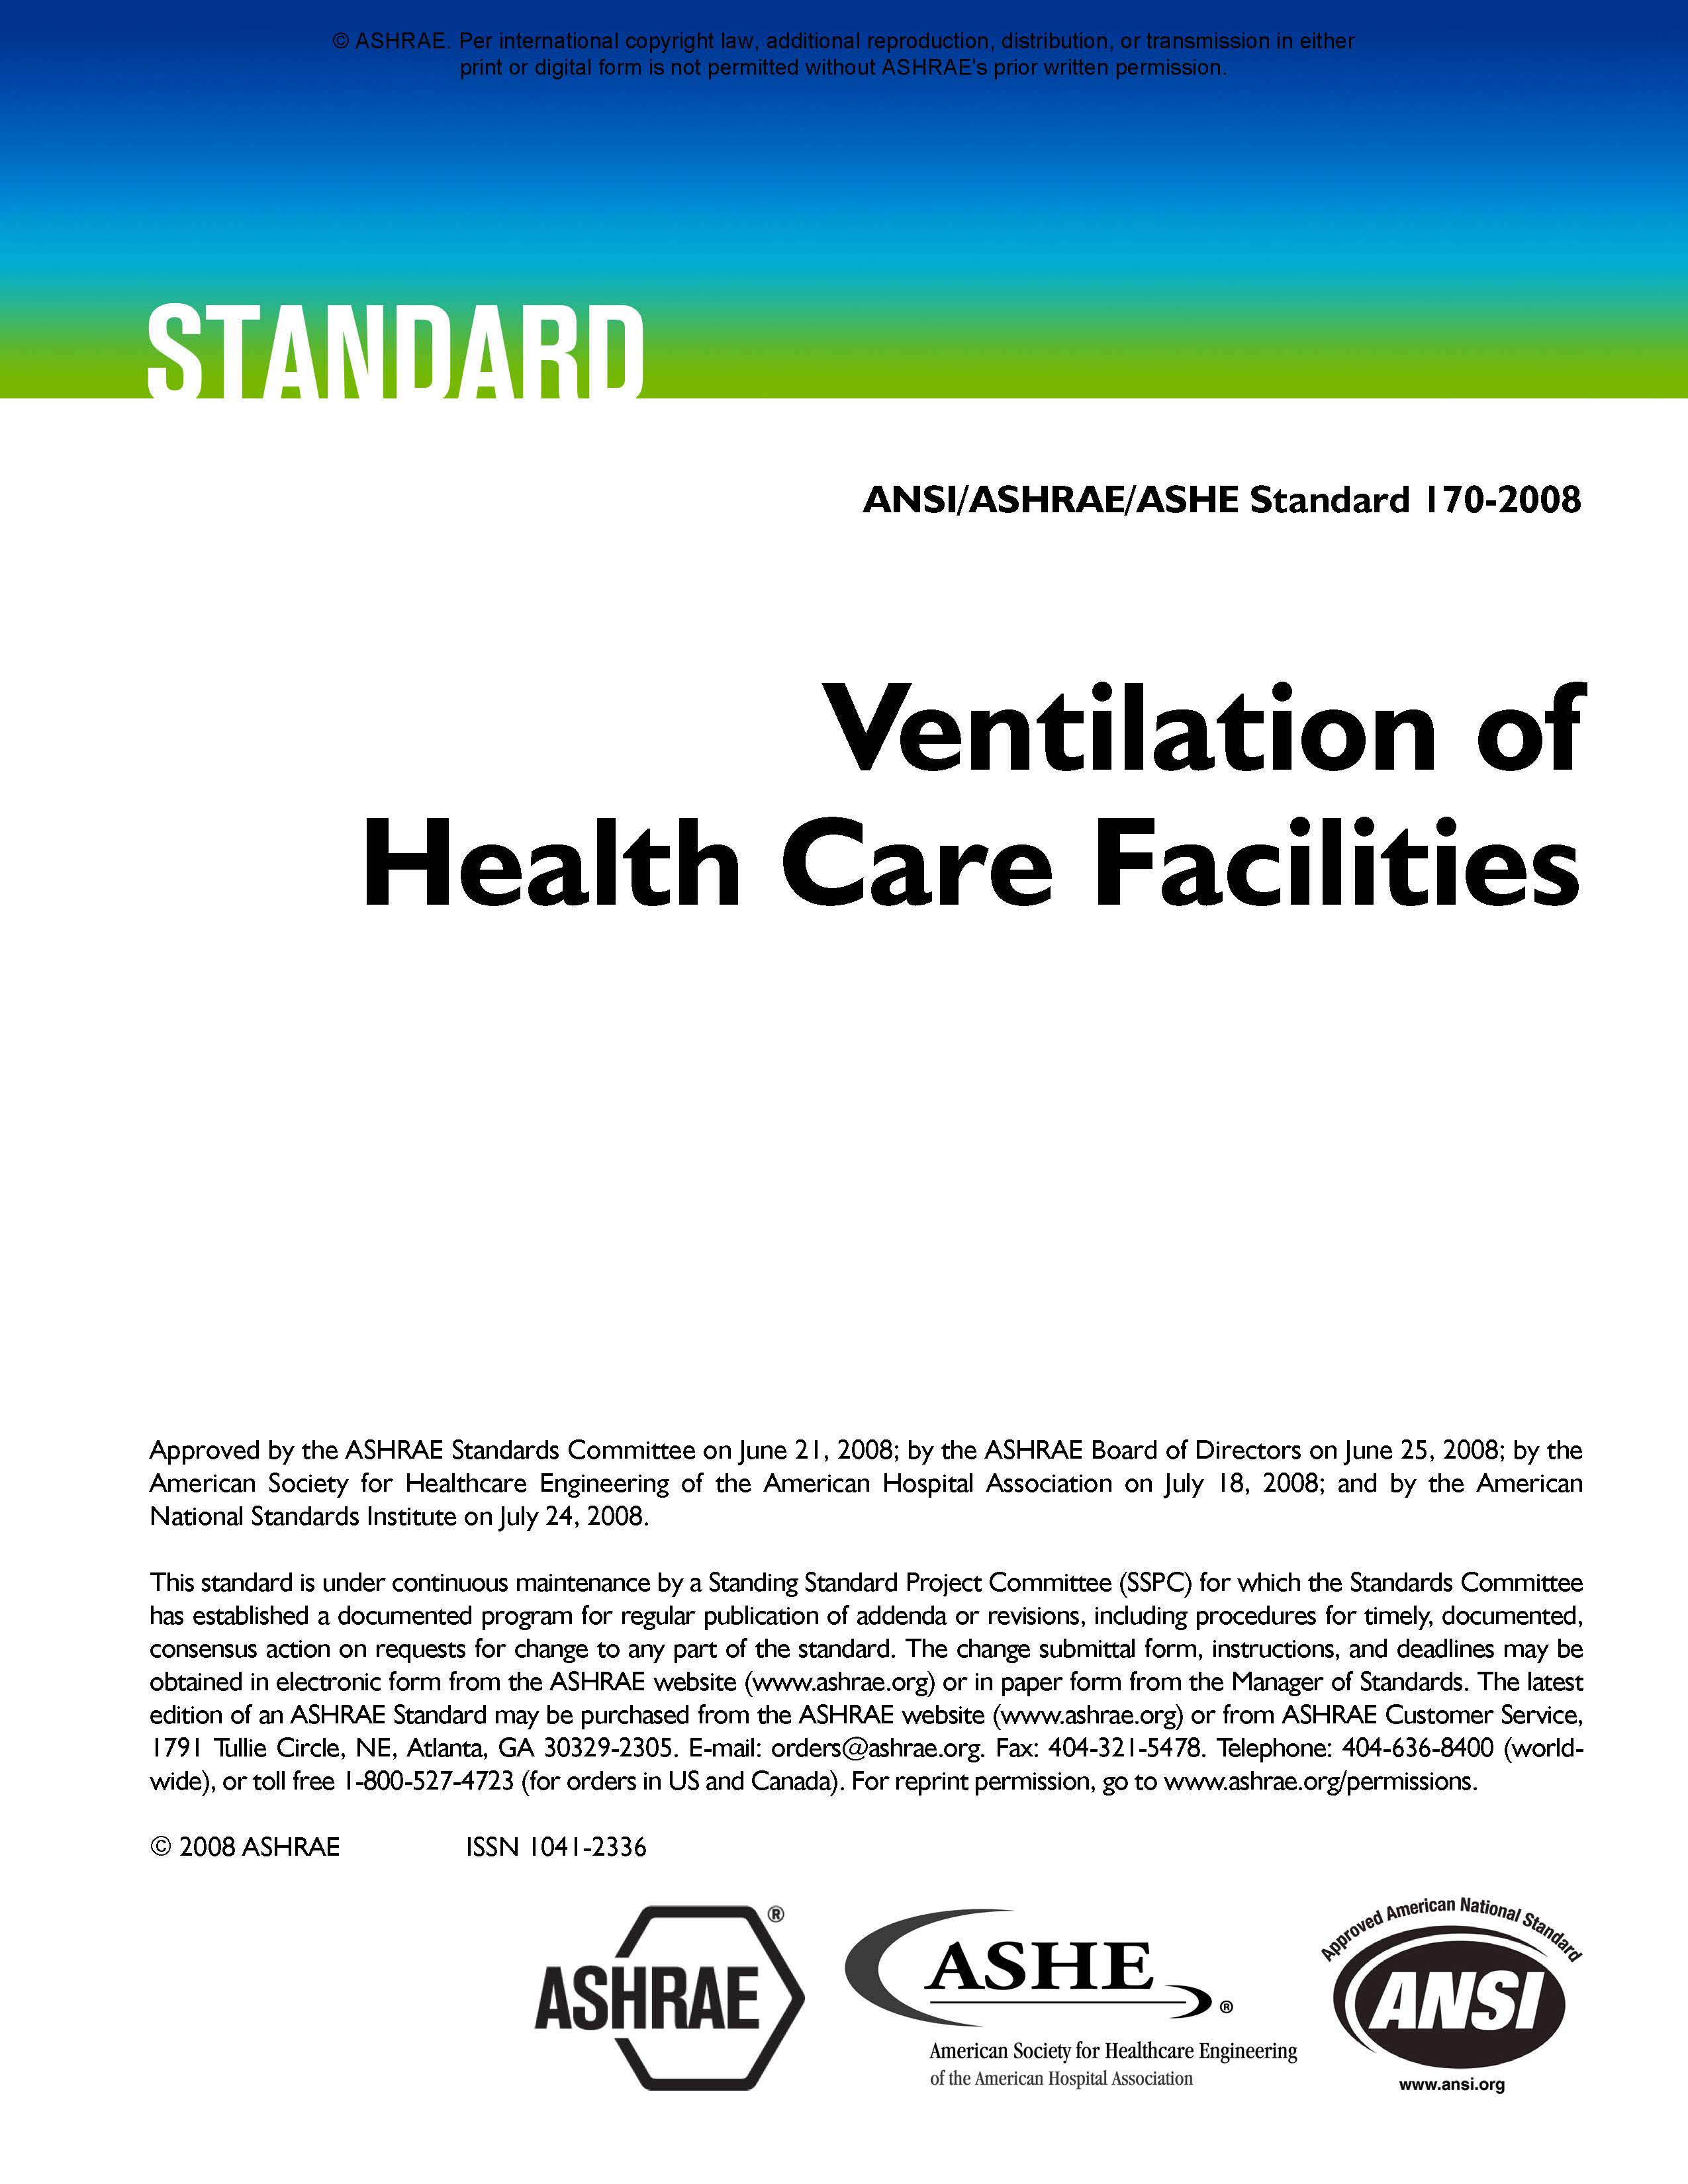 ANSI/ASHRAE/ASHE Standard 170-2008, Ventilation of Health Care Facilities: Digital Edition